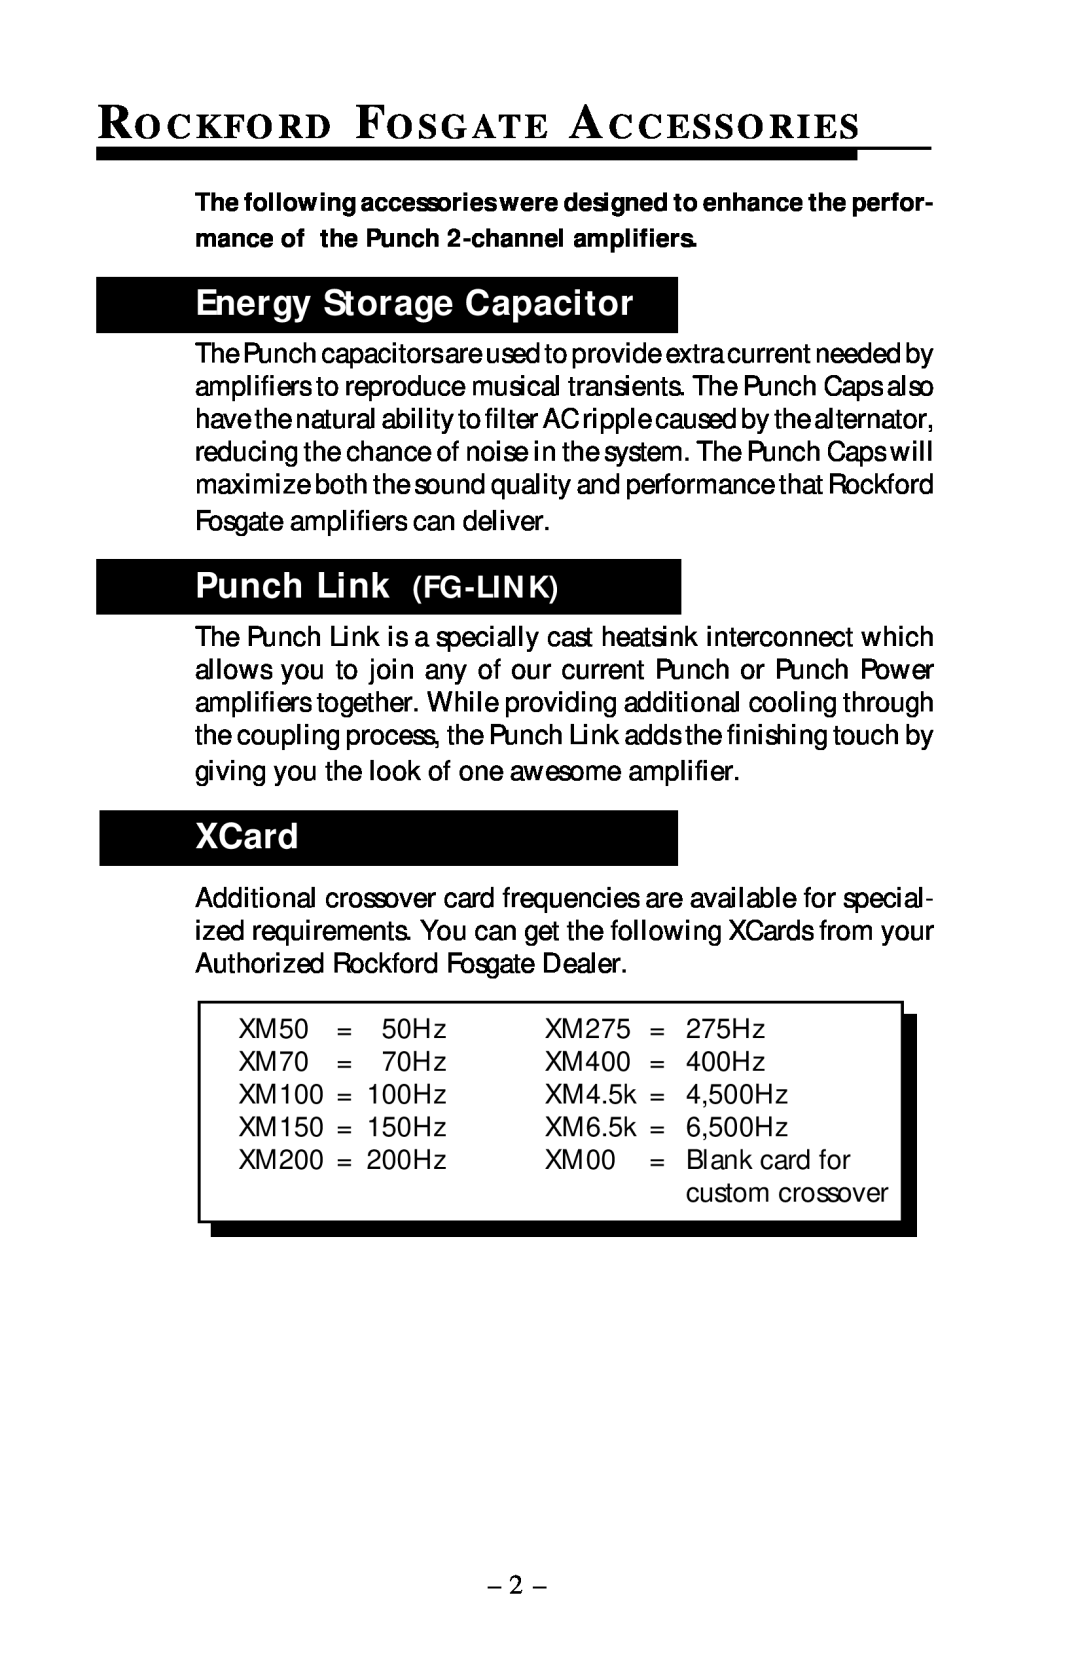 Rockford Fosgate 200ix, 40ix, 60ix, 100ix operation manual Energy Storage Capacitor, Punch Link FG-LINK, XCard 